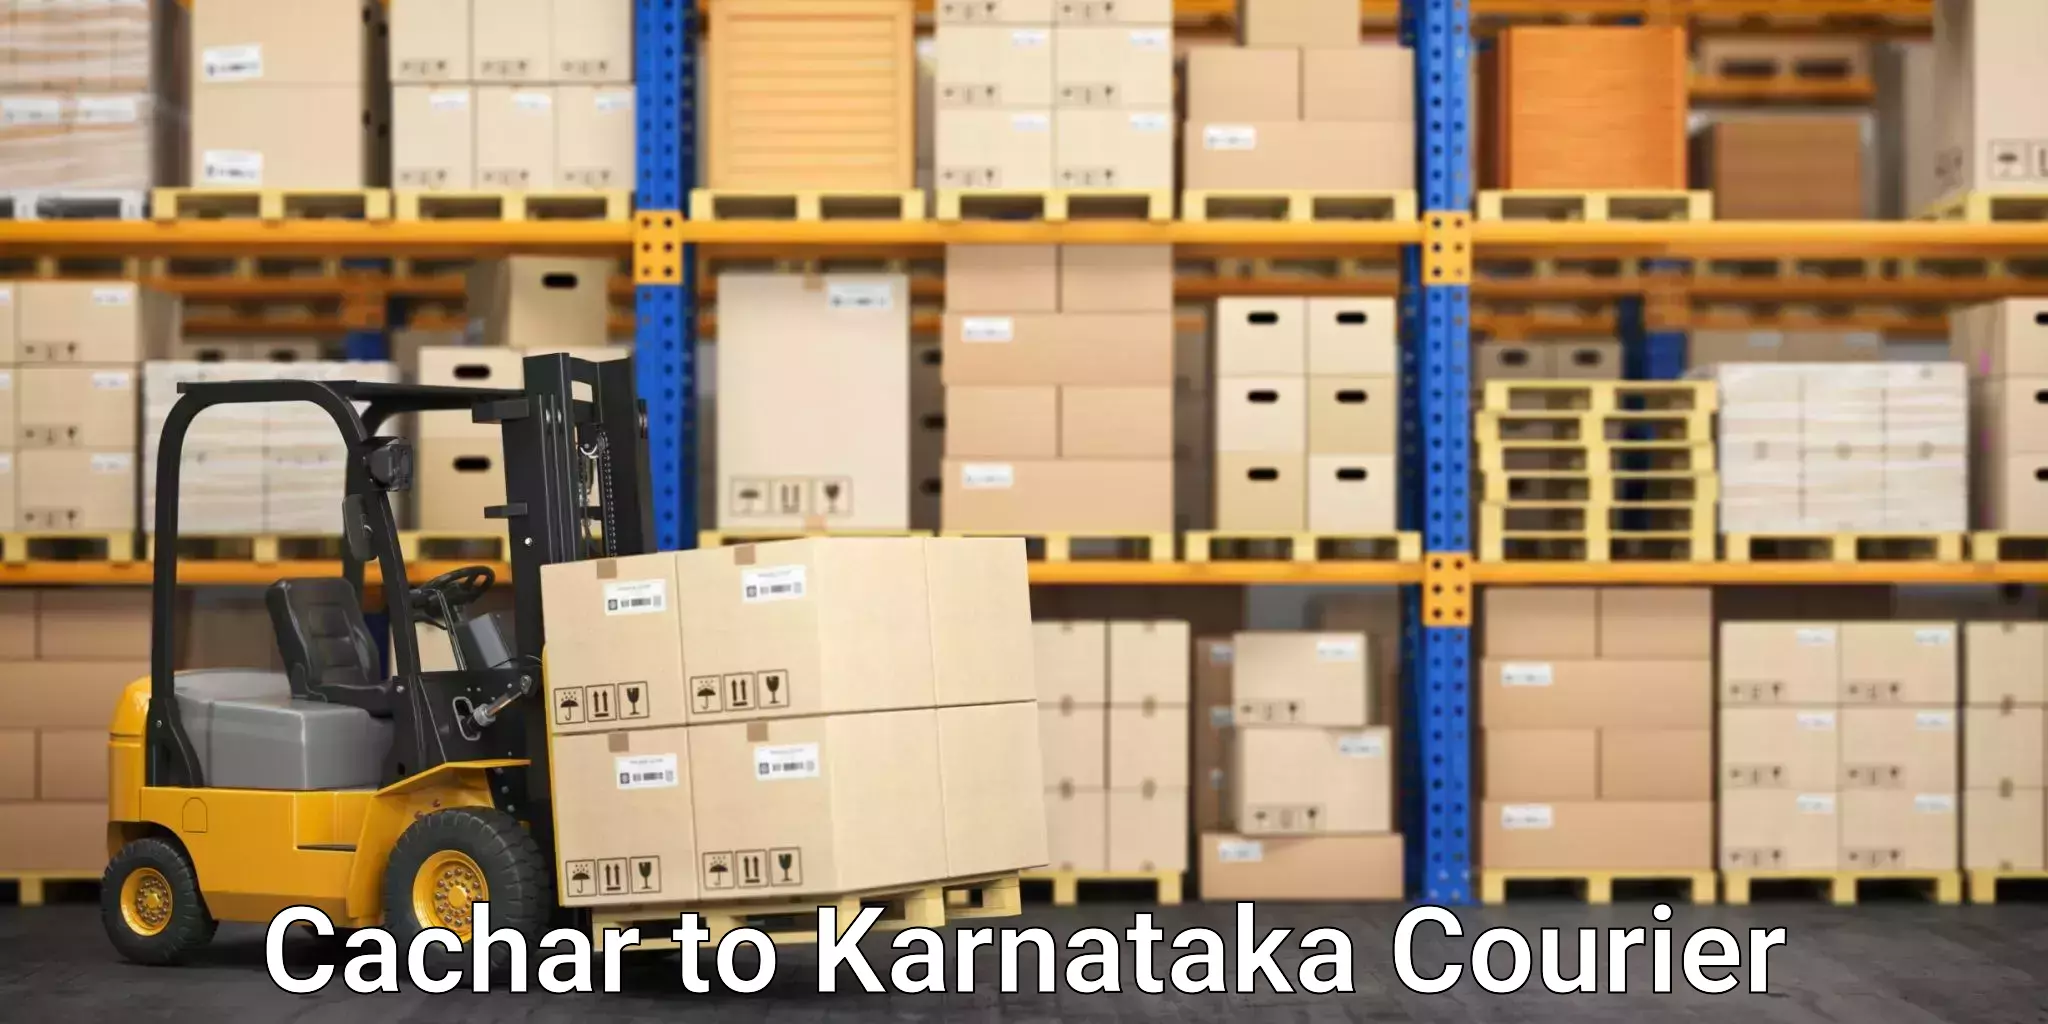 24/7 courier service Cachar to Karnataka